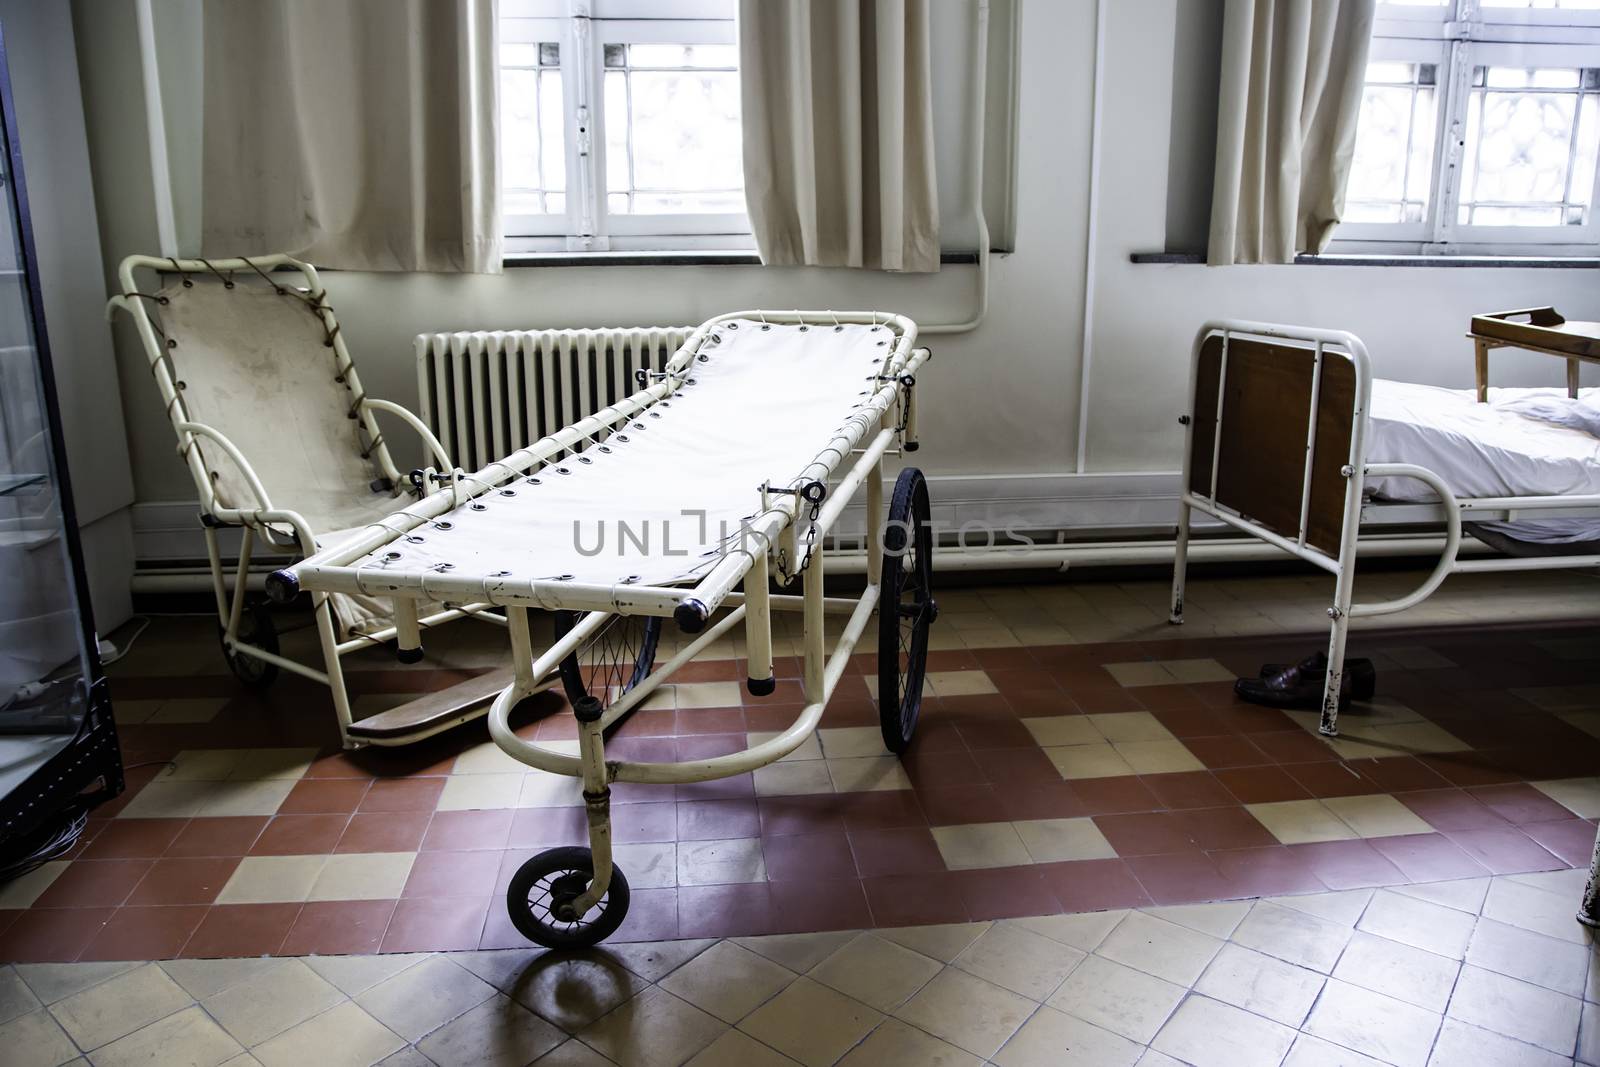 Antique hospital stretcher, bed detail for patients